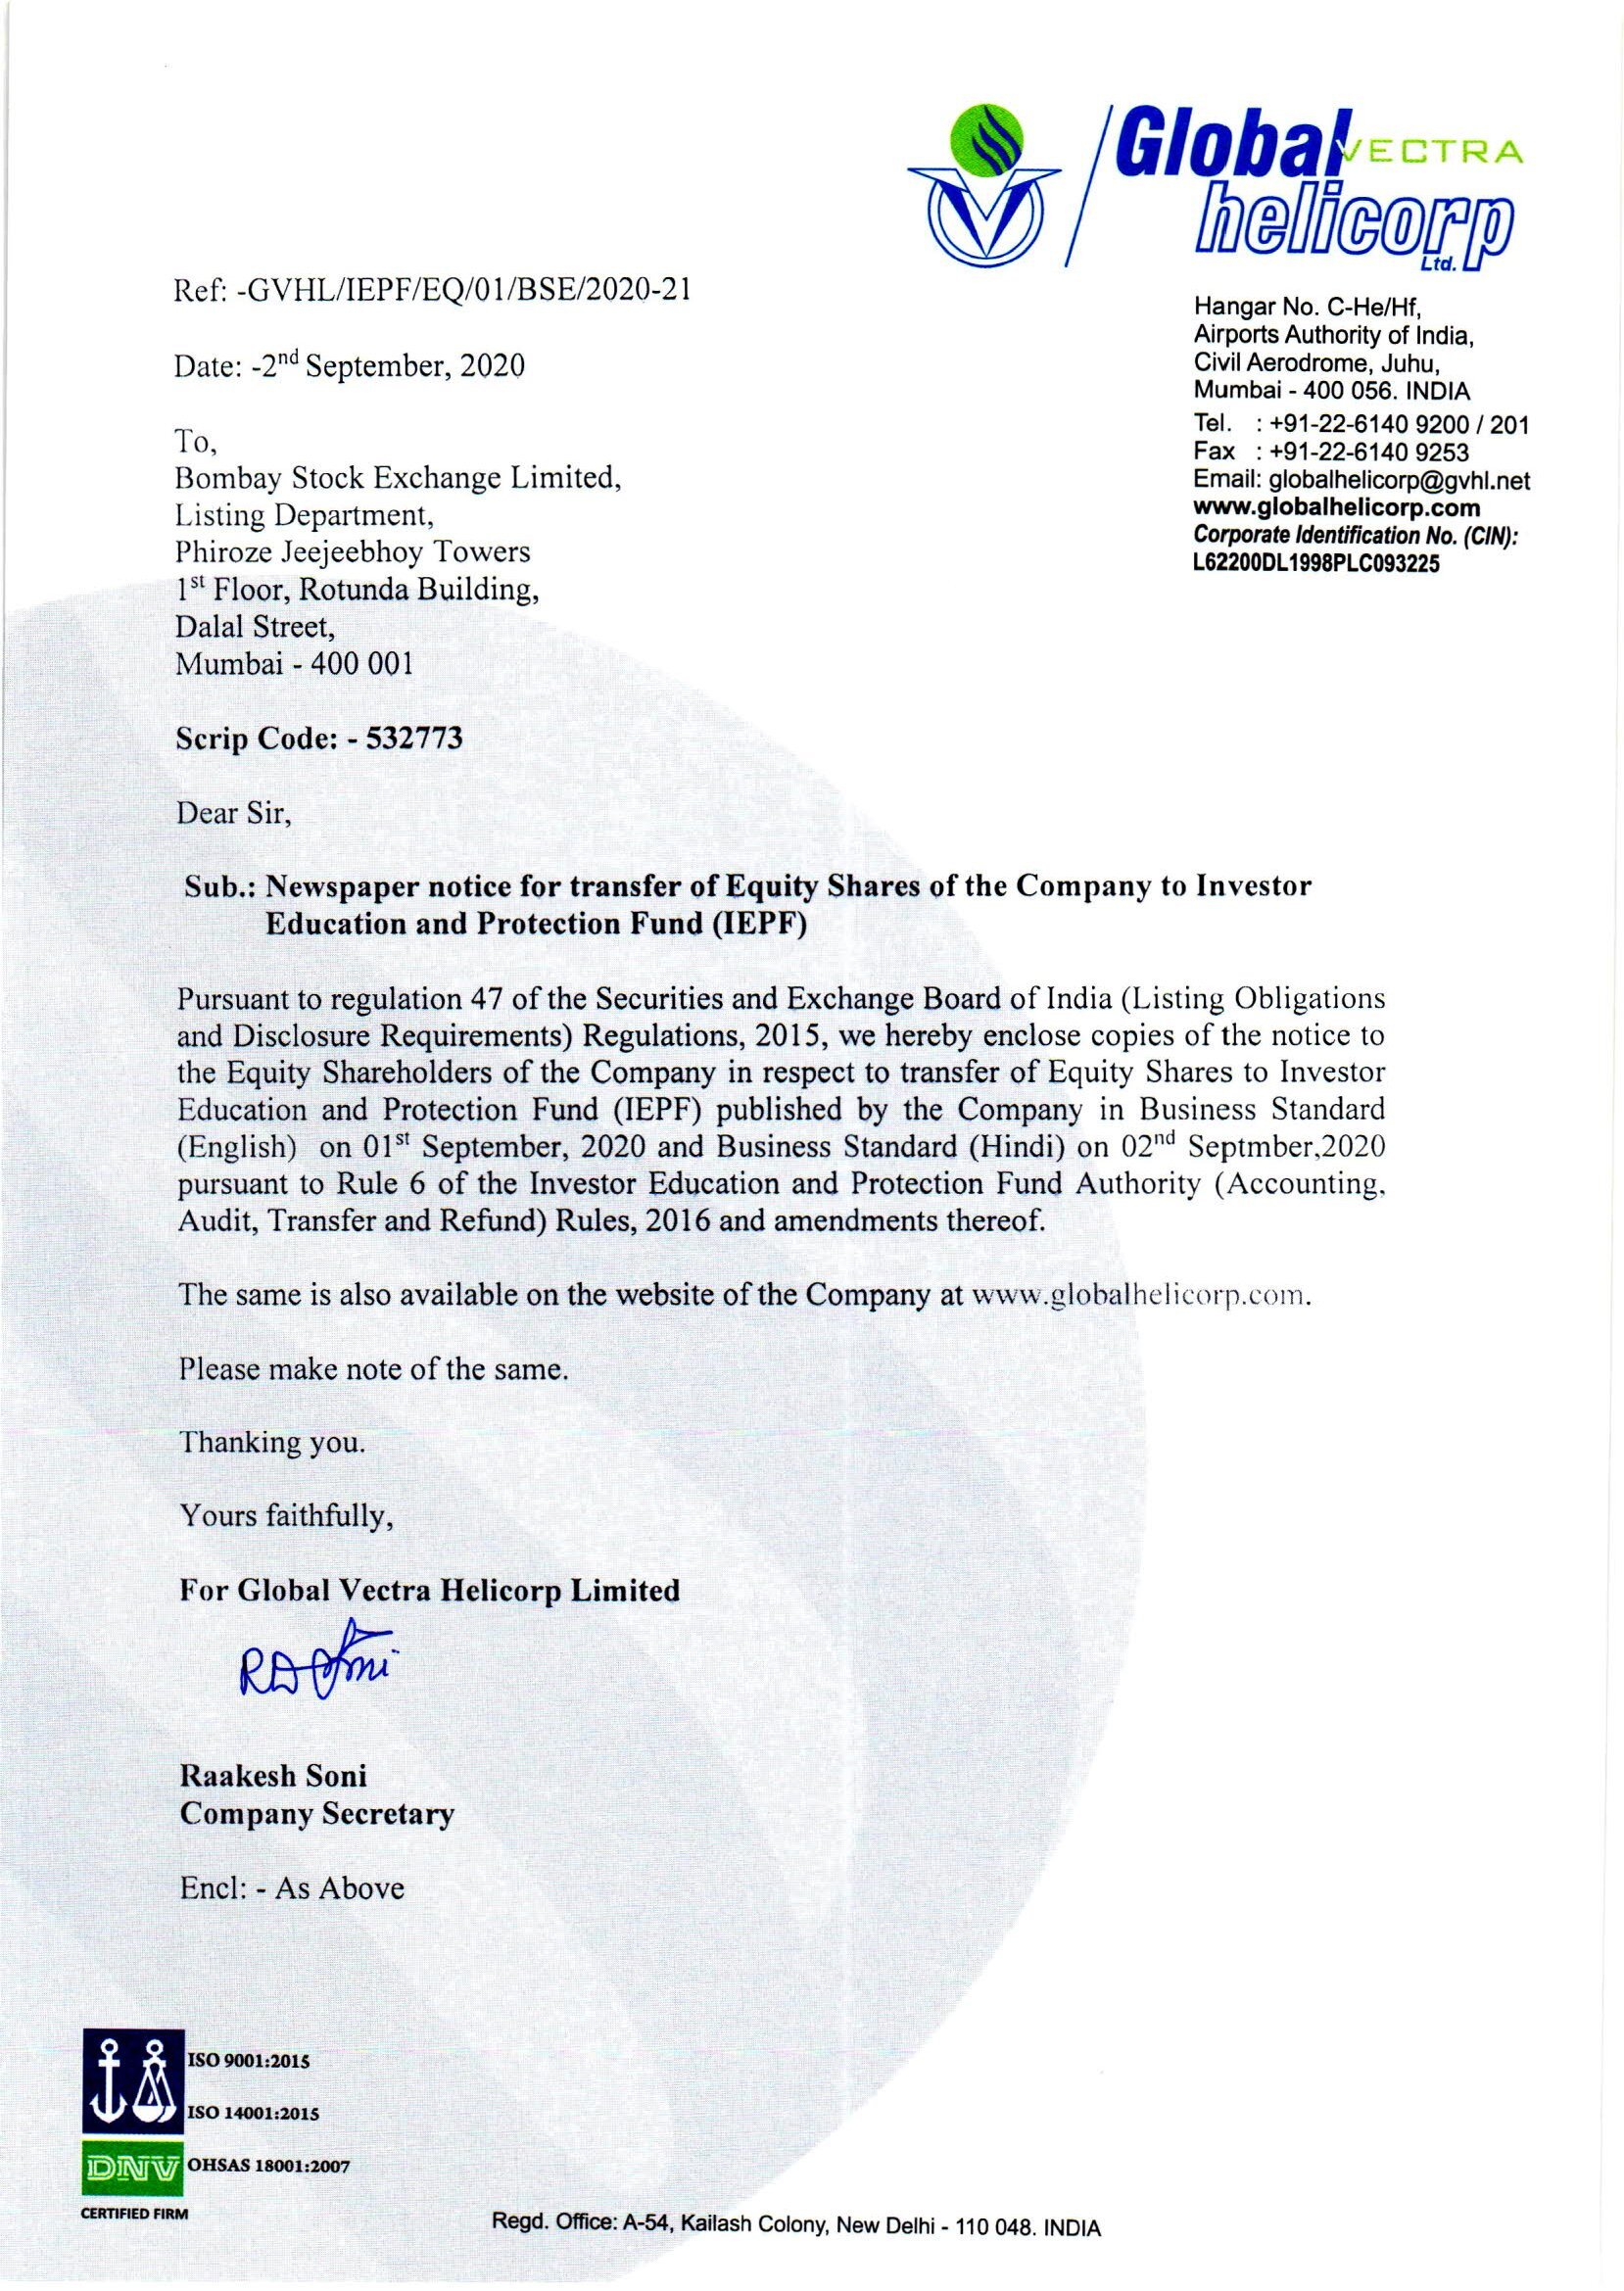 News Paper Publication for Transfer for Shares to IEPF